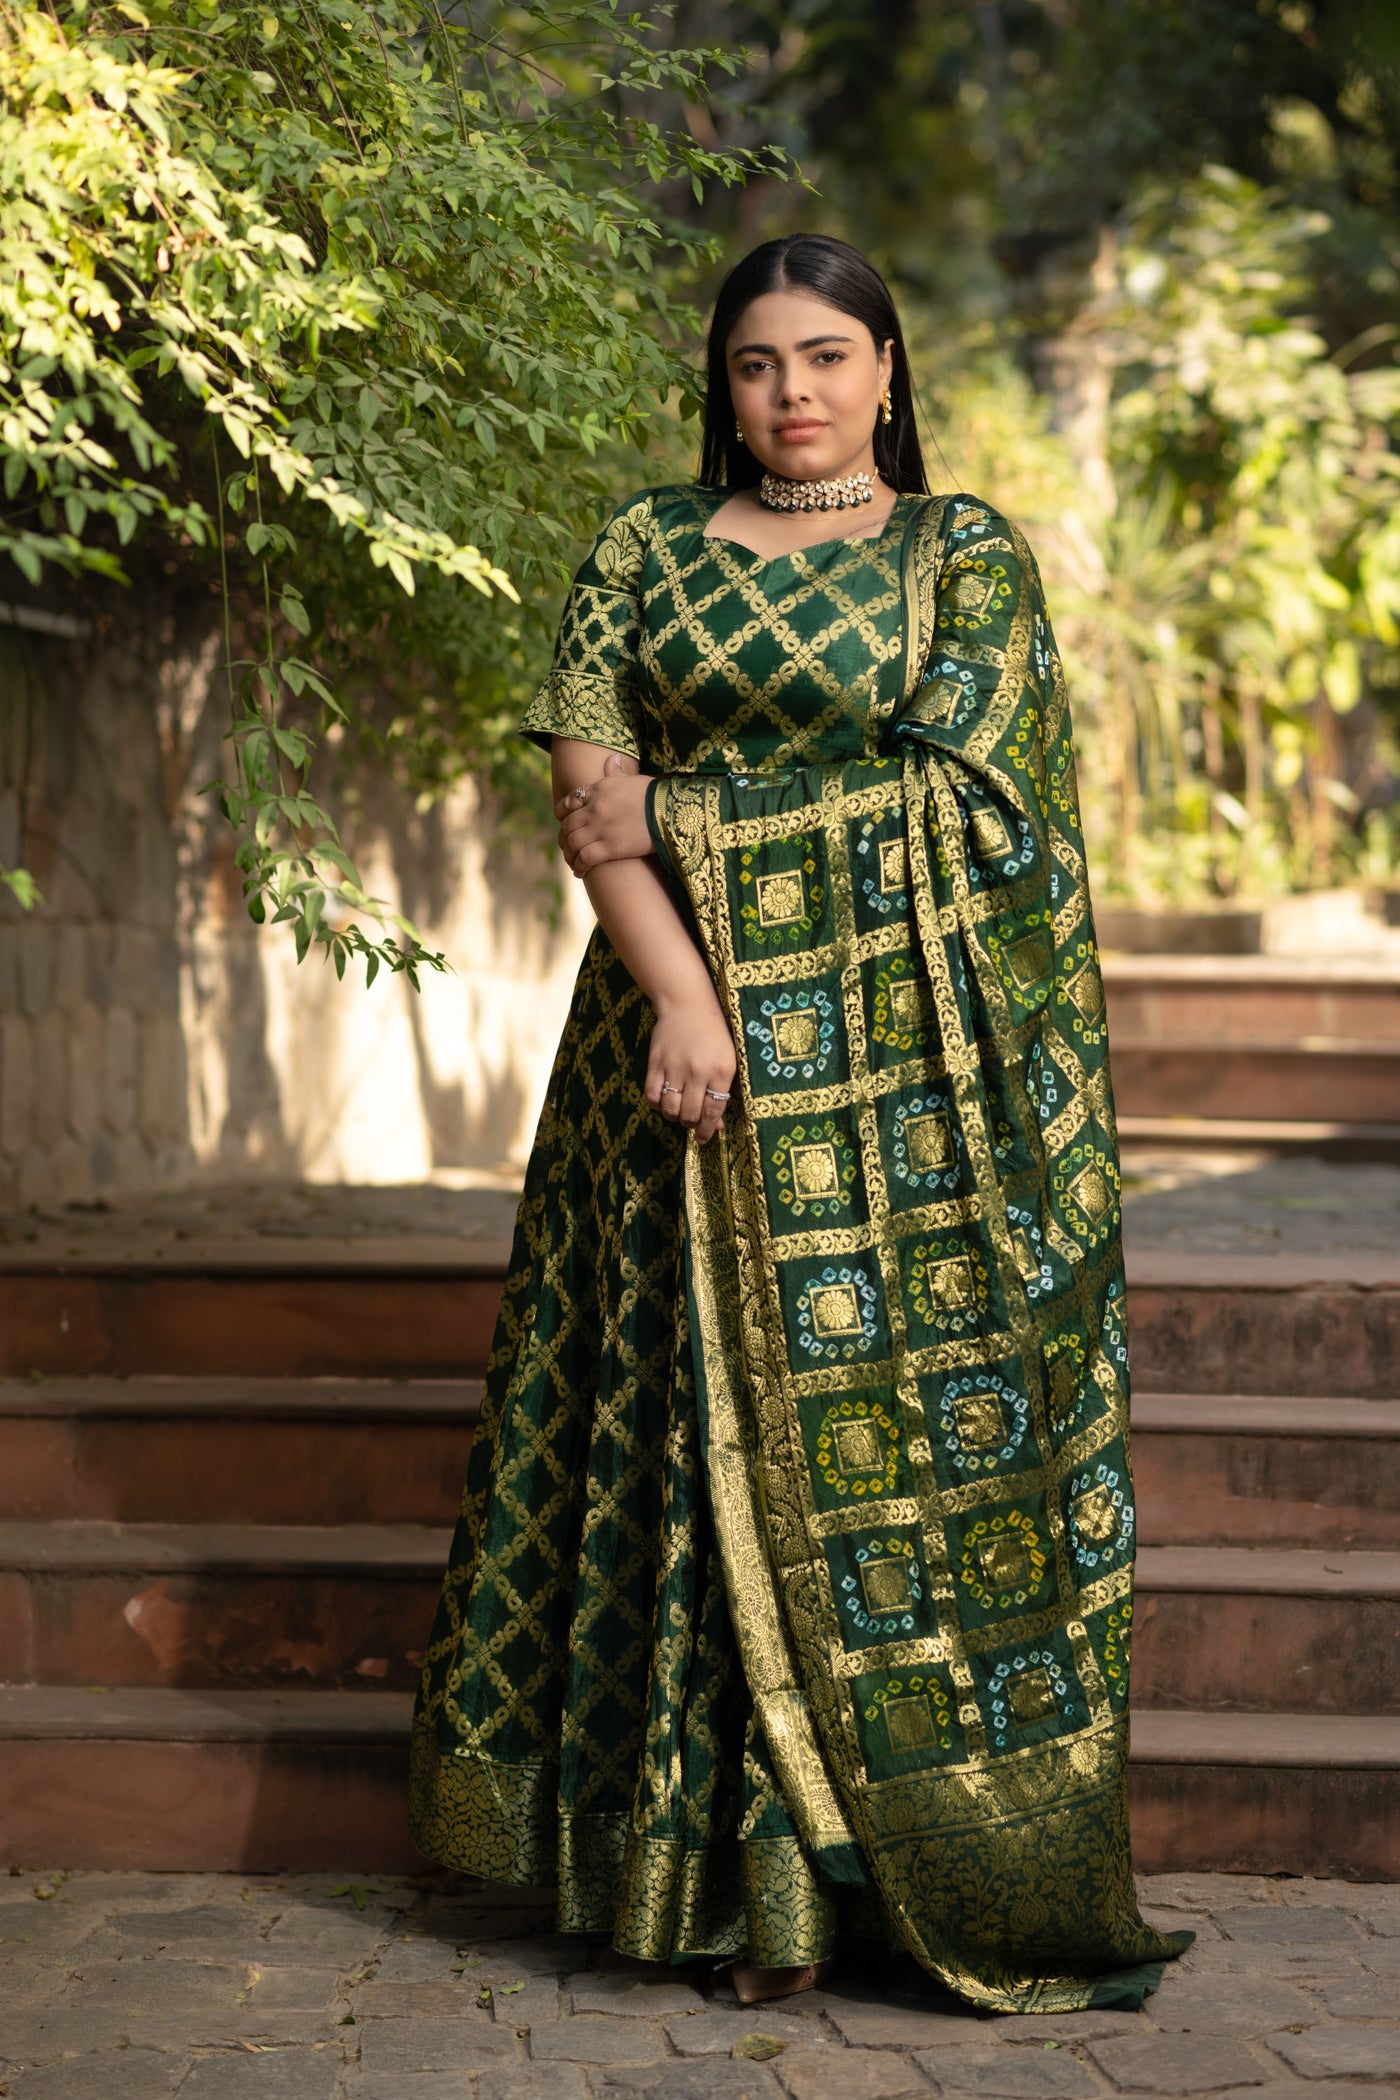 Green Banarasi Lehenga Choli by Saras the label - 3 pcs set